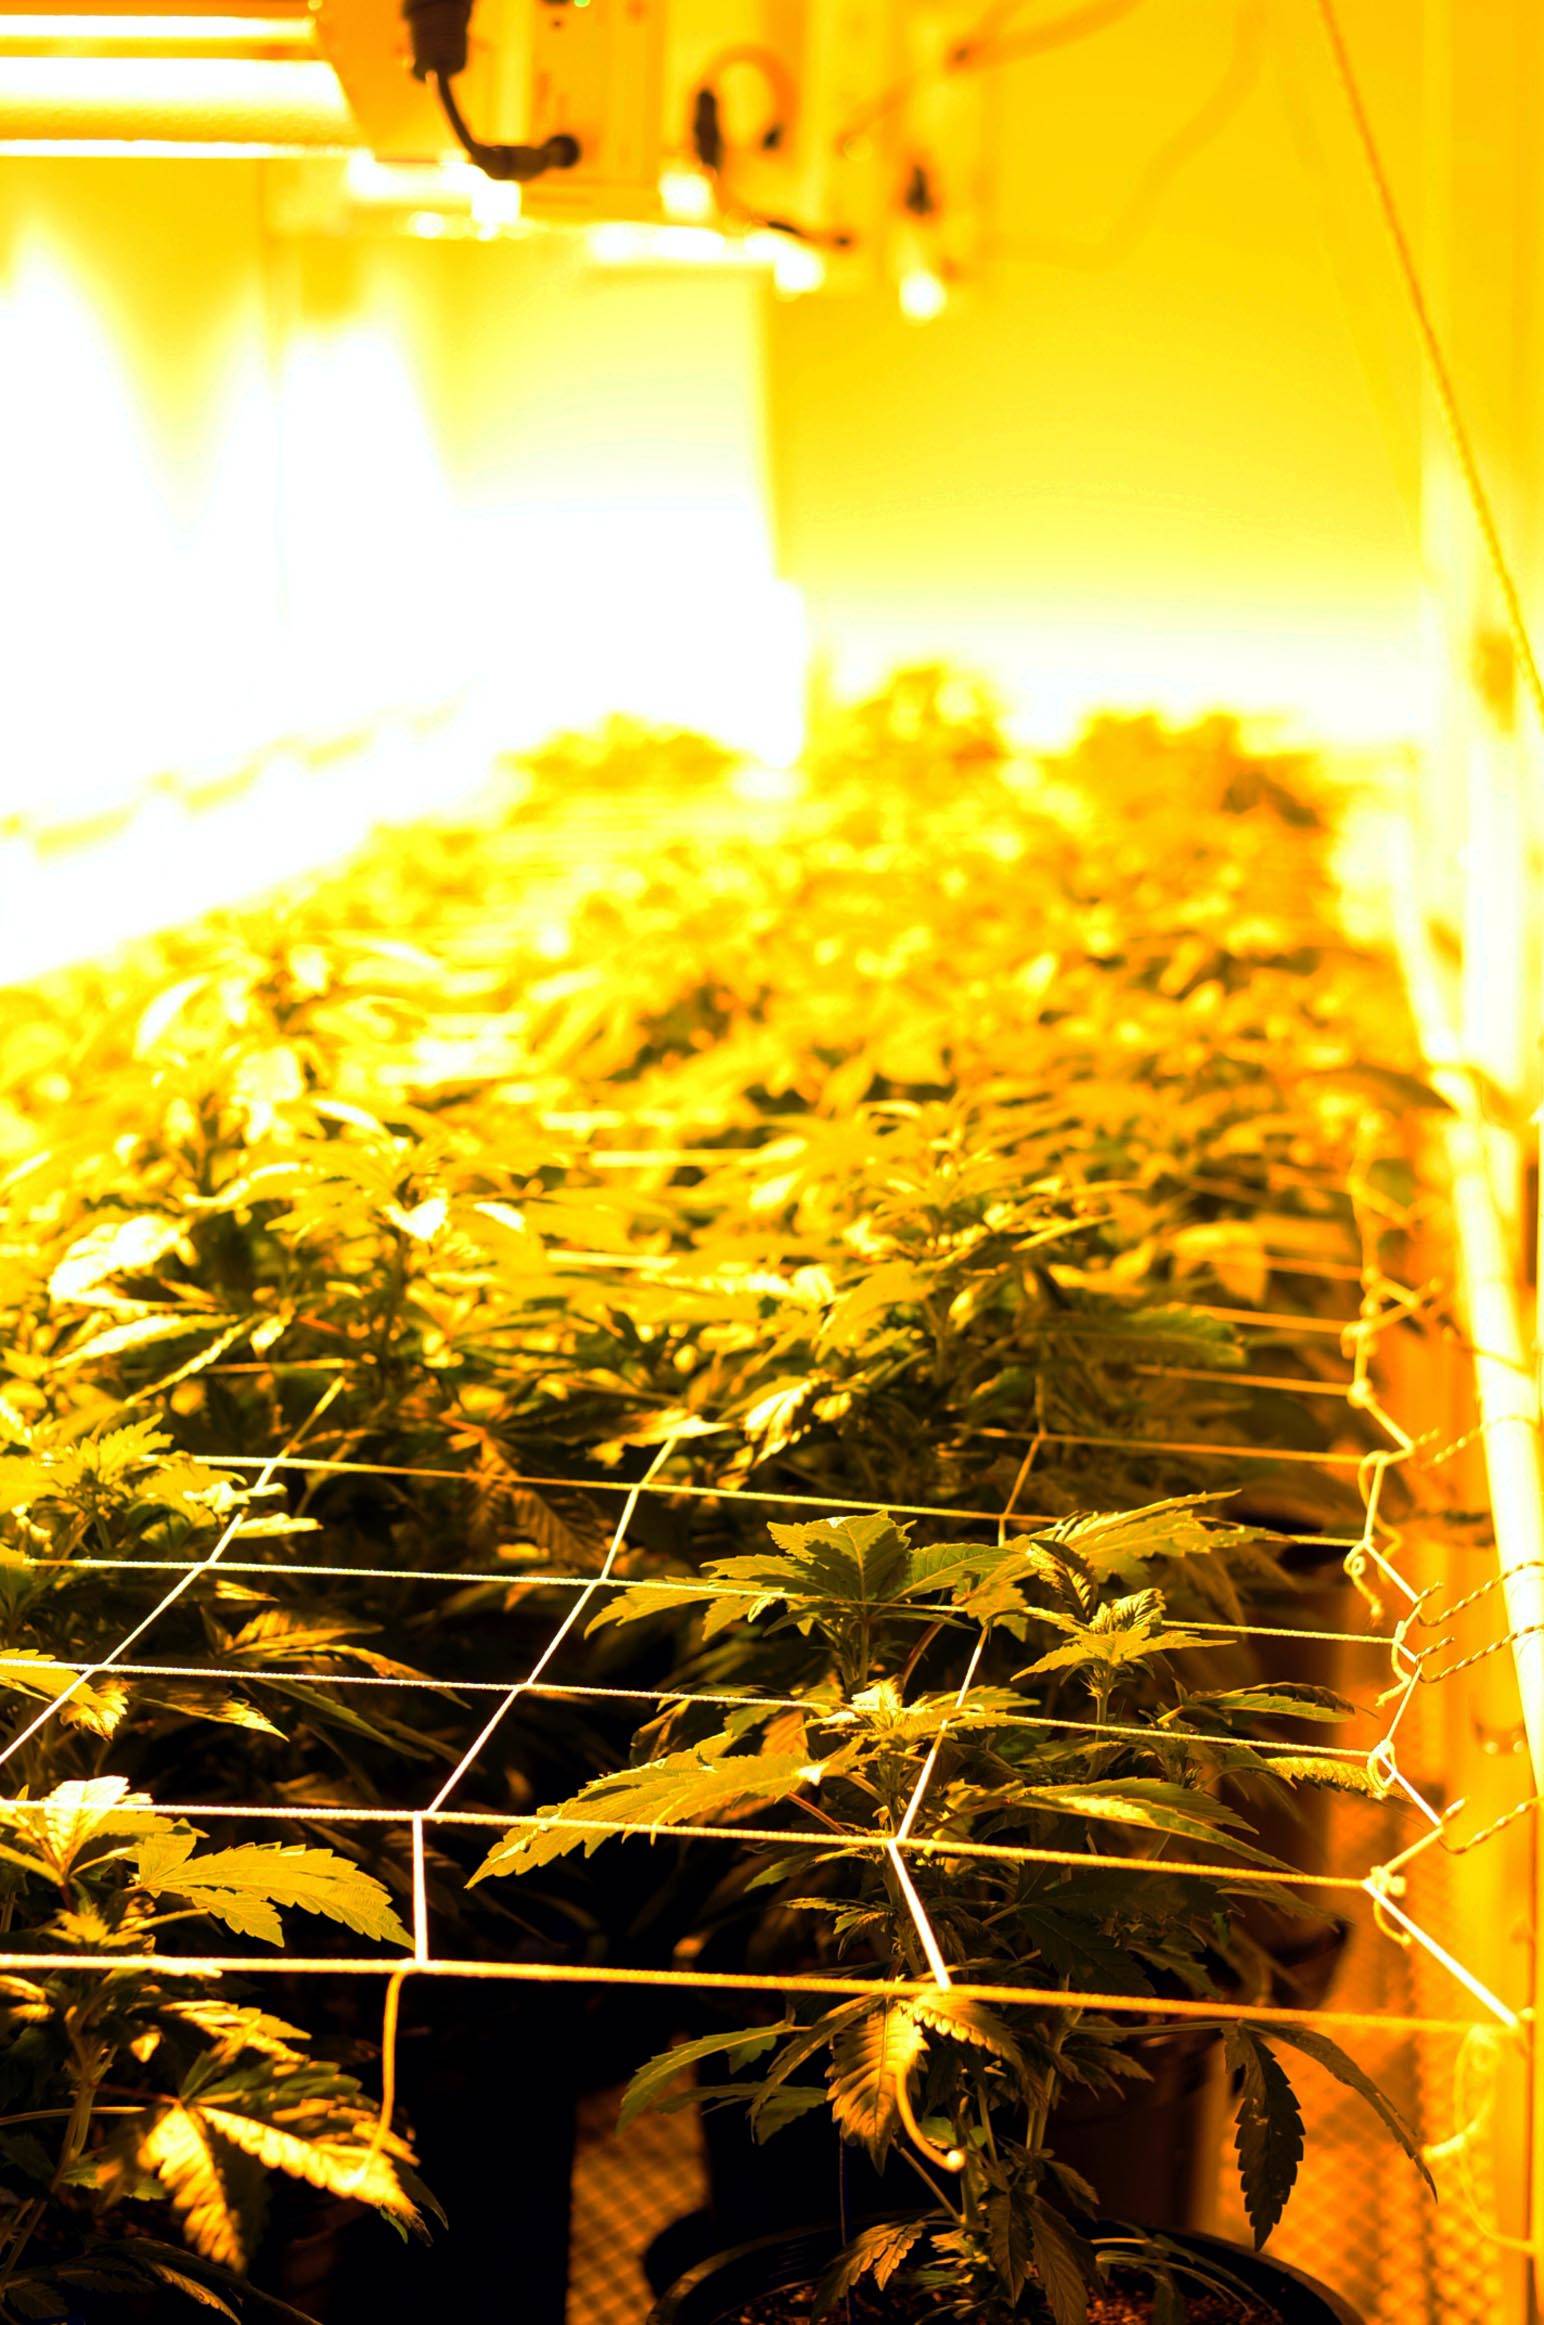 In this December 2016 photo, marijuana plants grow under heat lamps at marijuana cultivation facility Croy’s Enterprises near Soldotna, Alaska. (Photo by Elizabeth Earl/Peninsula Clarion, file)